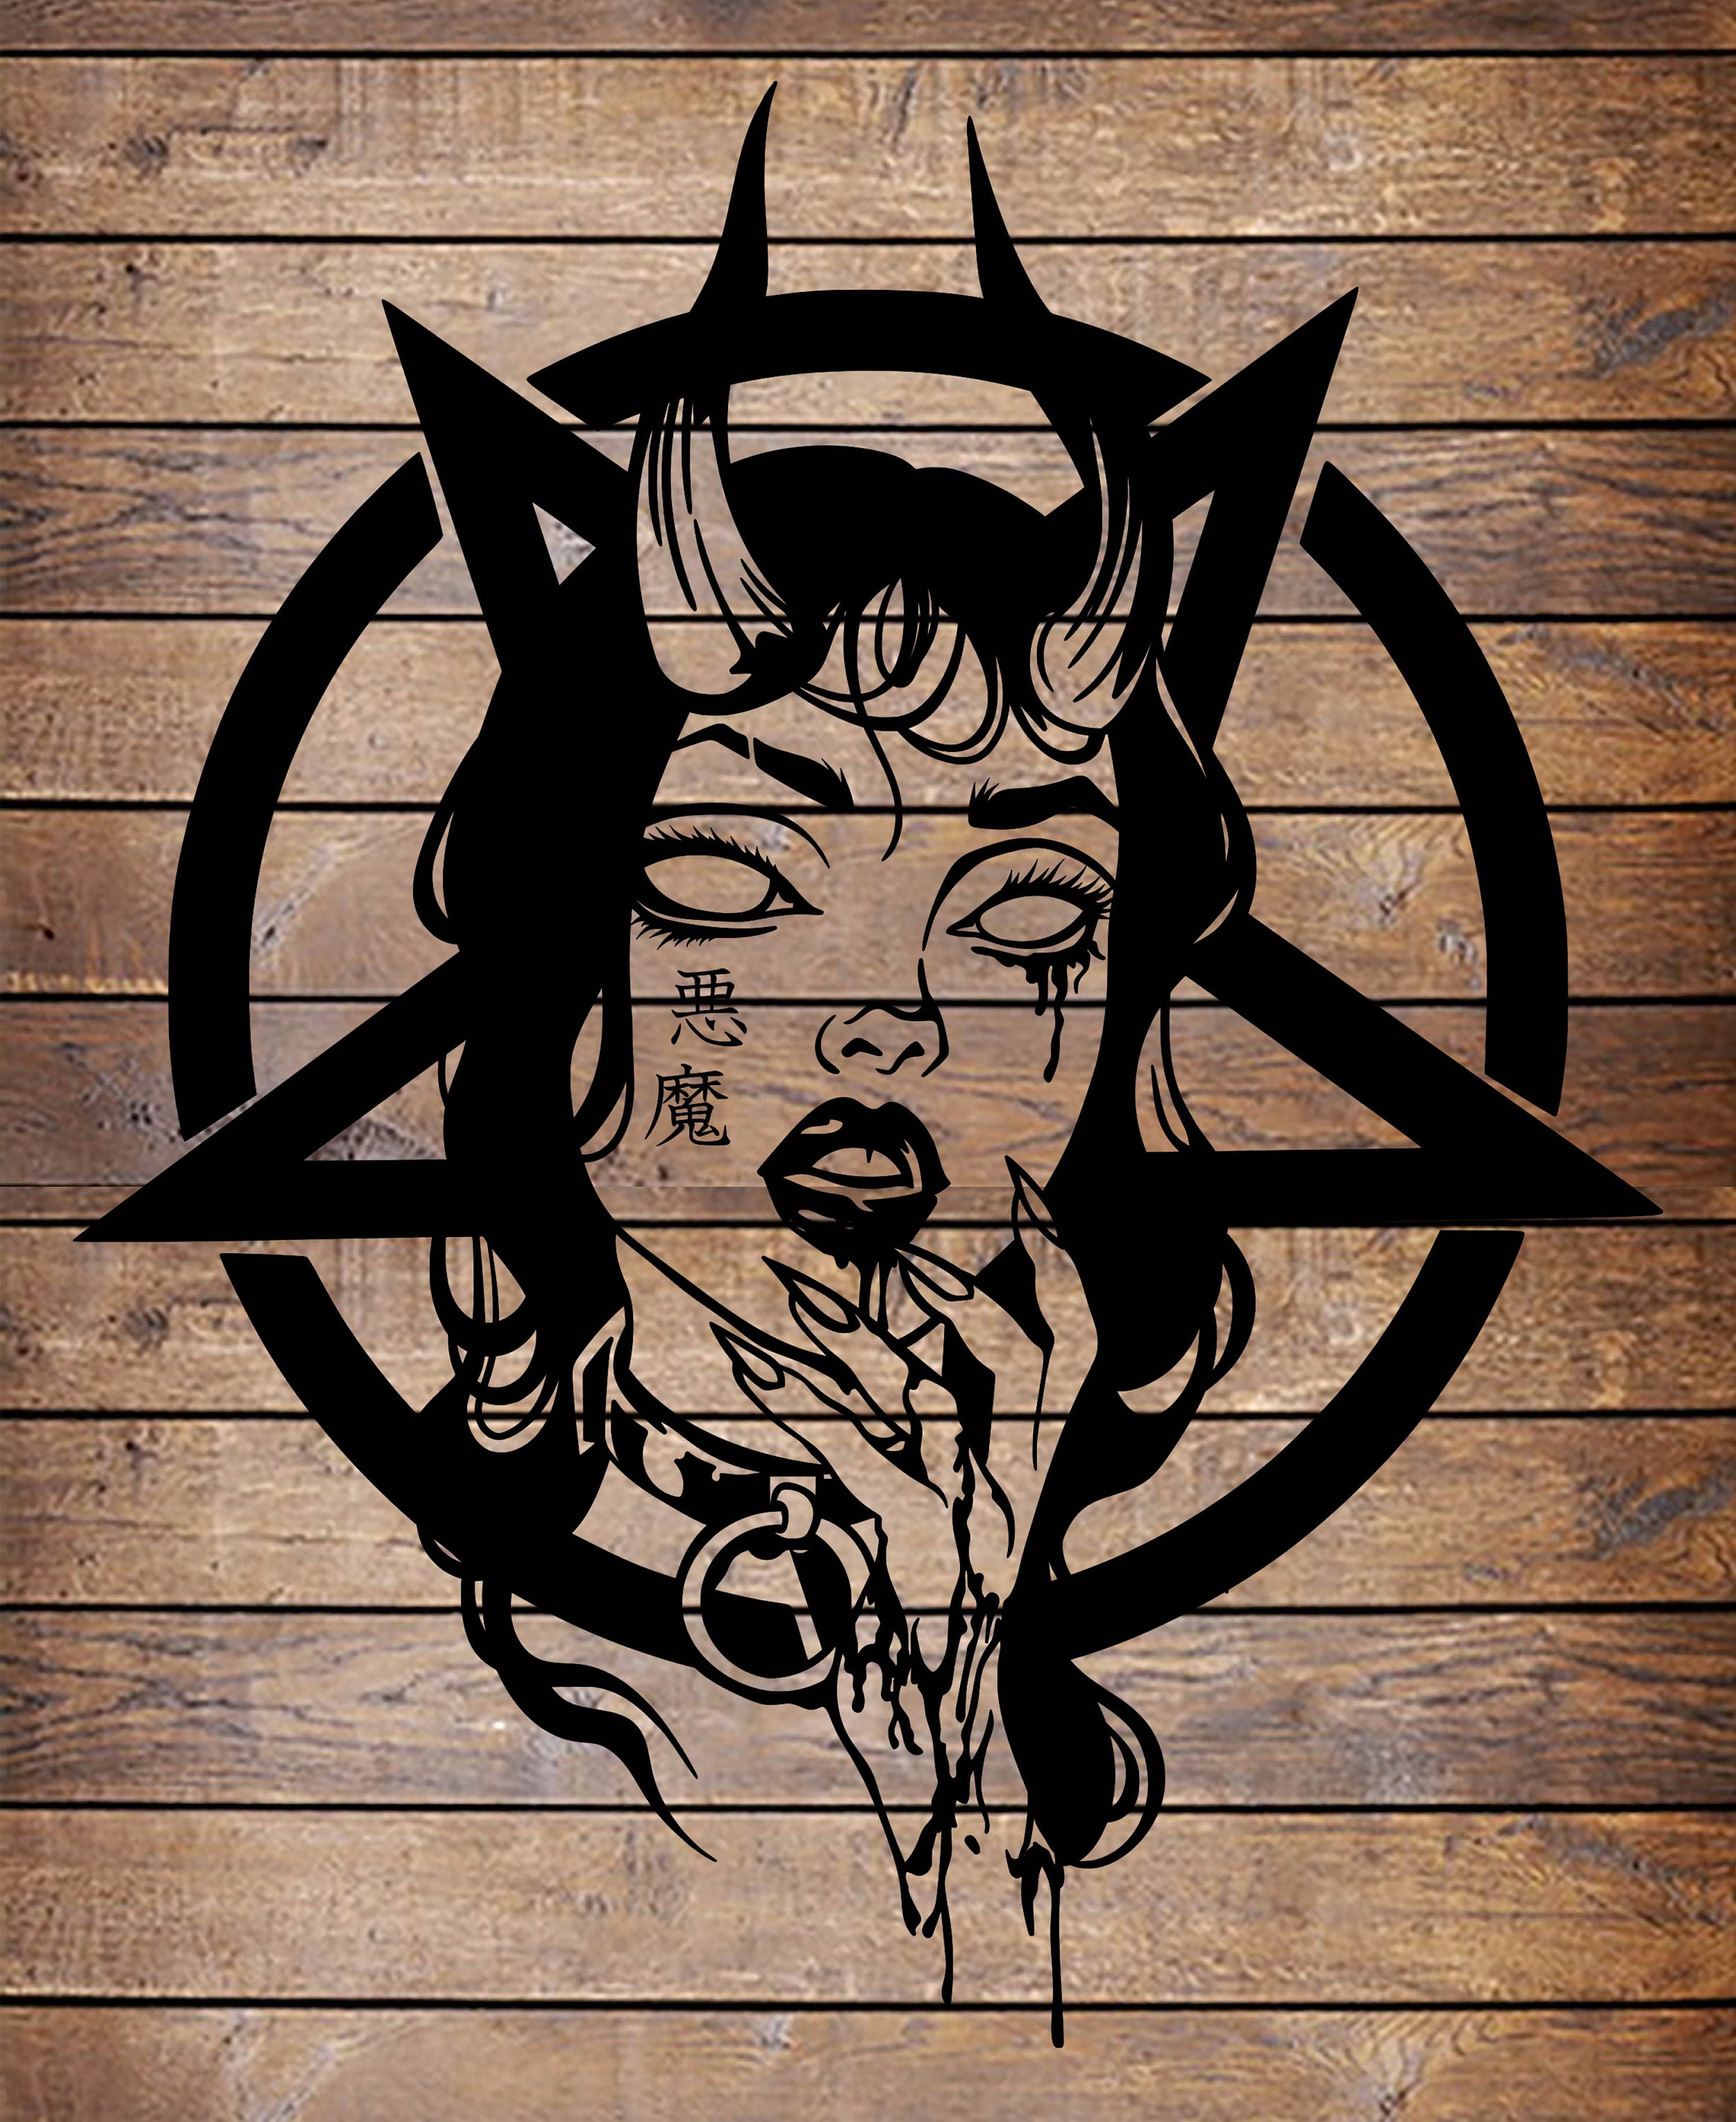 Devil Girl Tattoo Designs